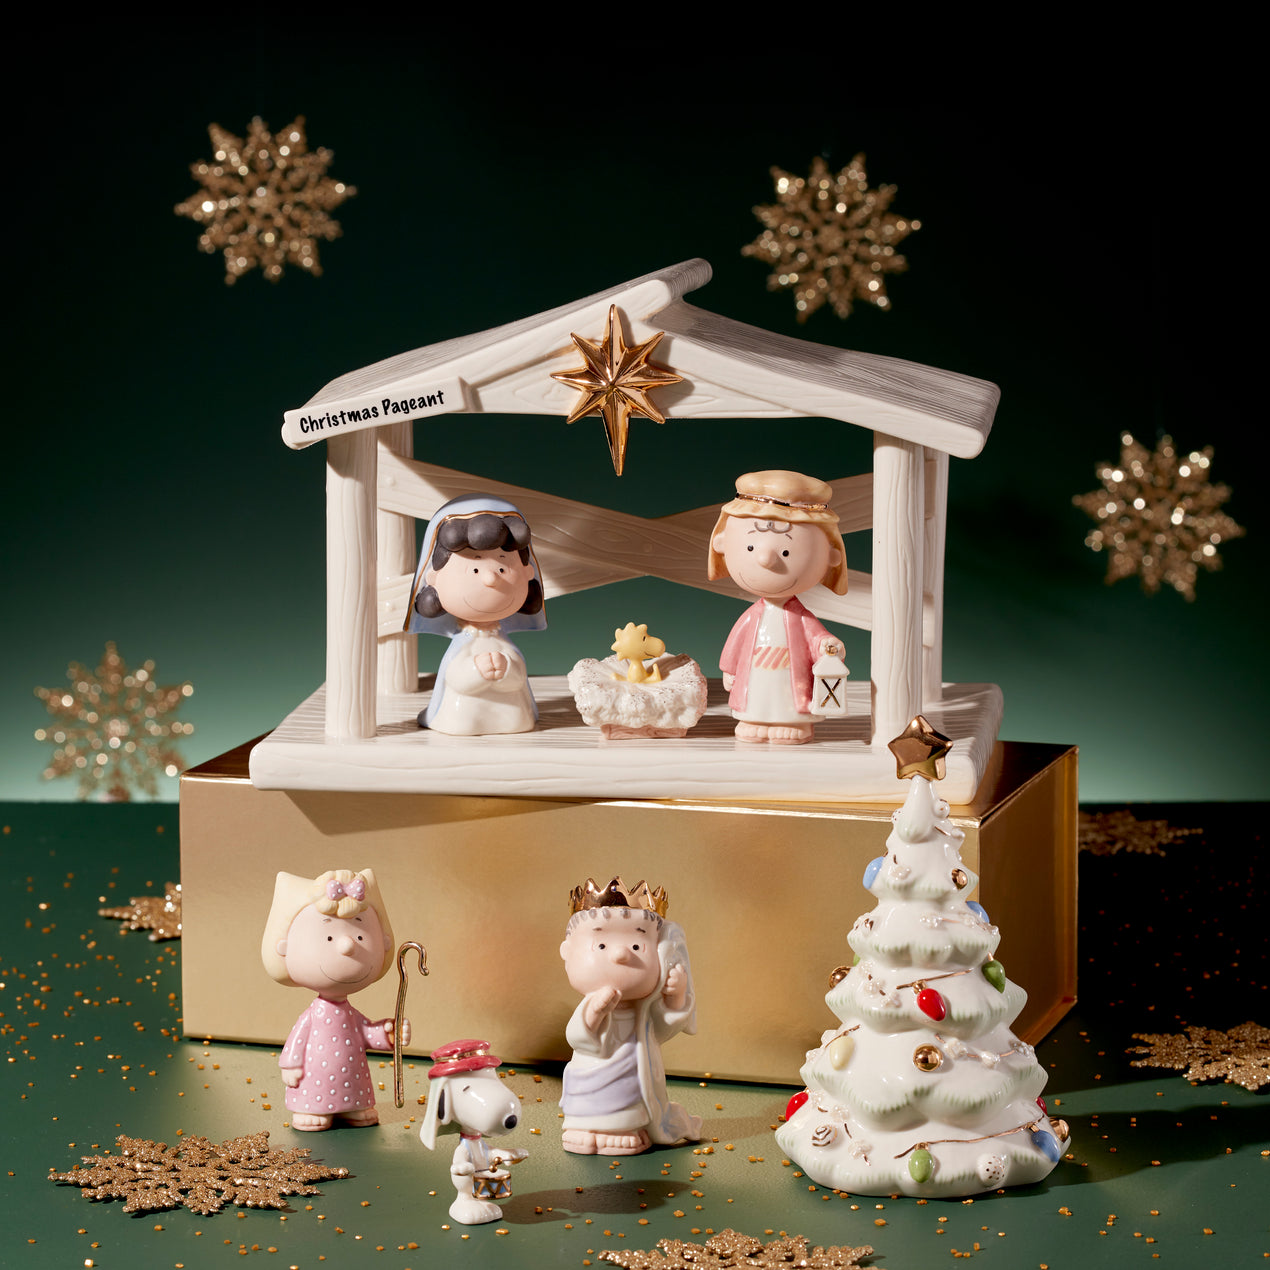 Peanuts The Christmas Pageant & Creche 8-Piece Set – Lenox Corporation